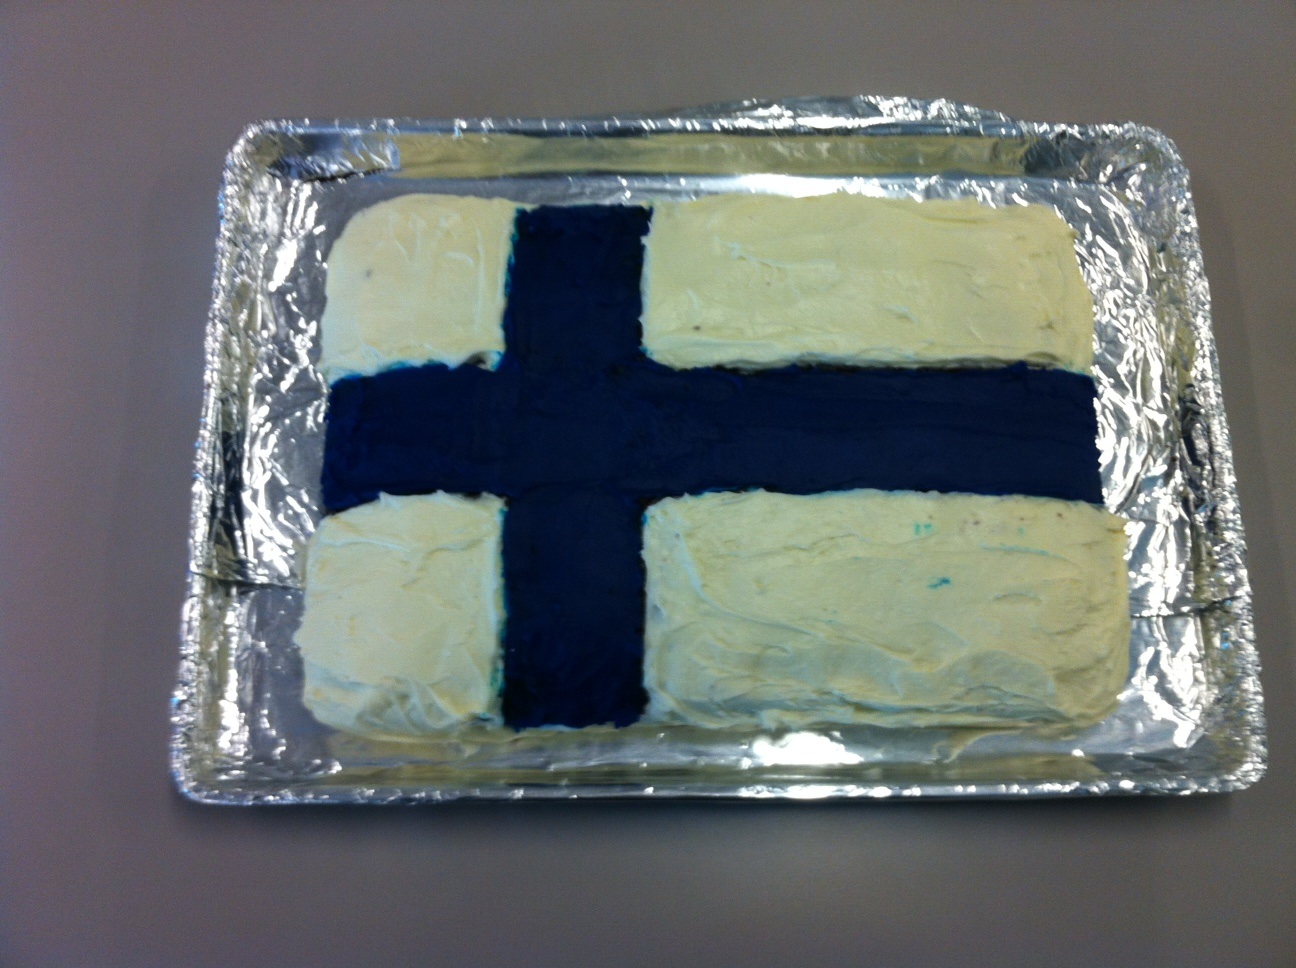 finland+cake.jpg